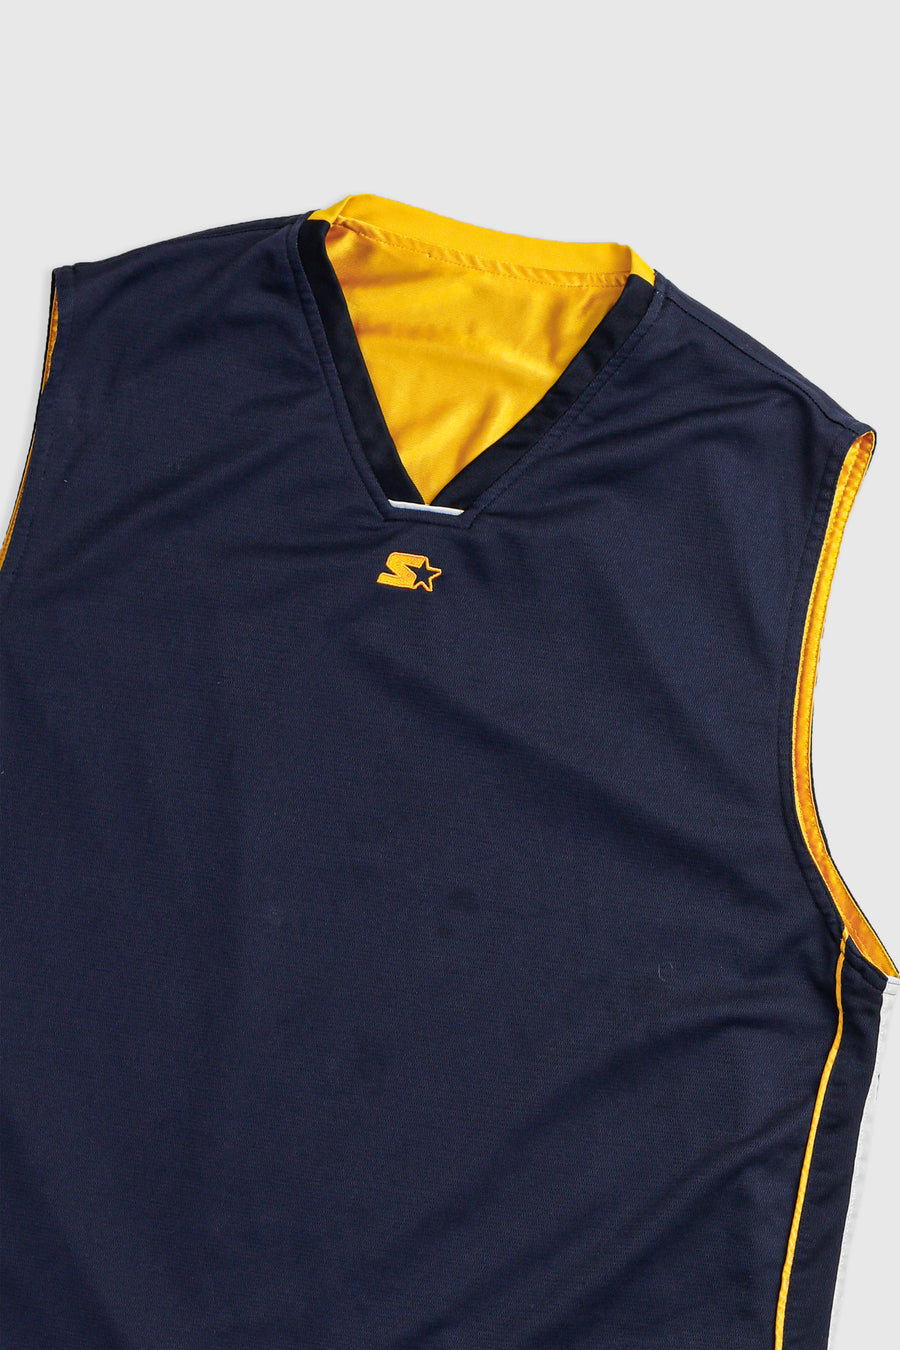 Vintage Starter Basketball Jersey - XL